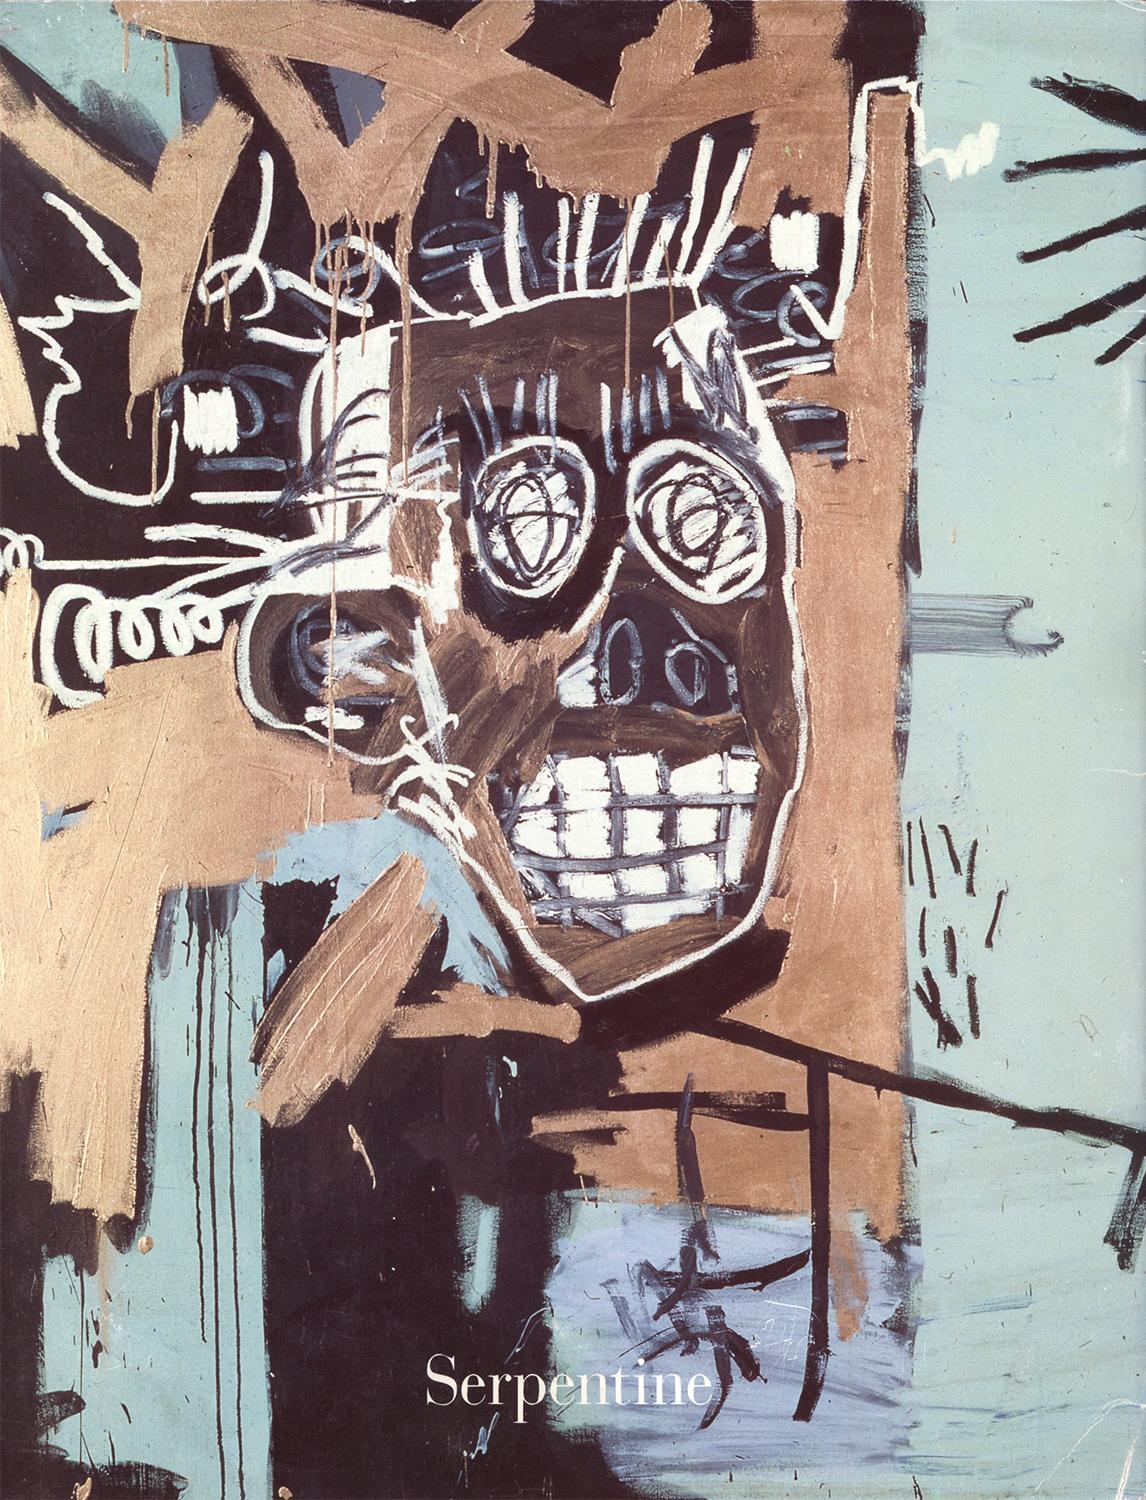 Basquiat Serpentine Gallery London 1996 (Exhibition Catalogue) - Print by after Jean-Michel Basquiat